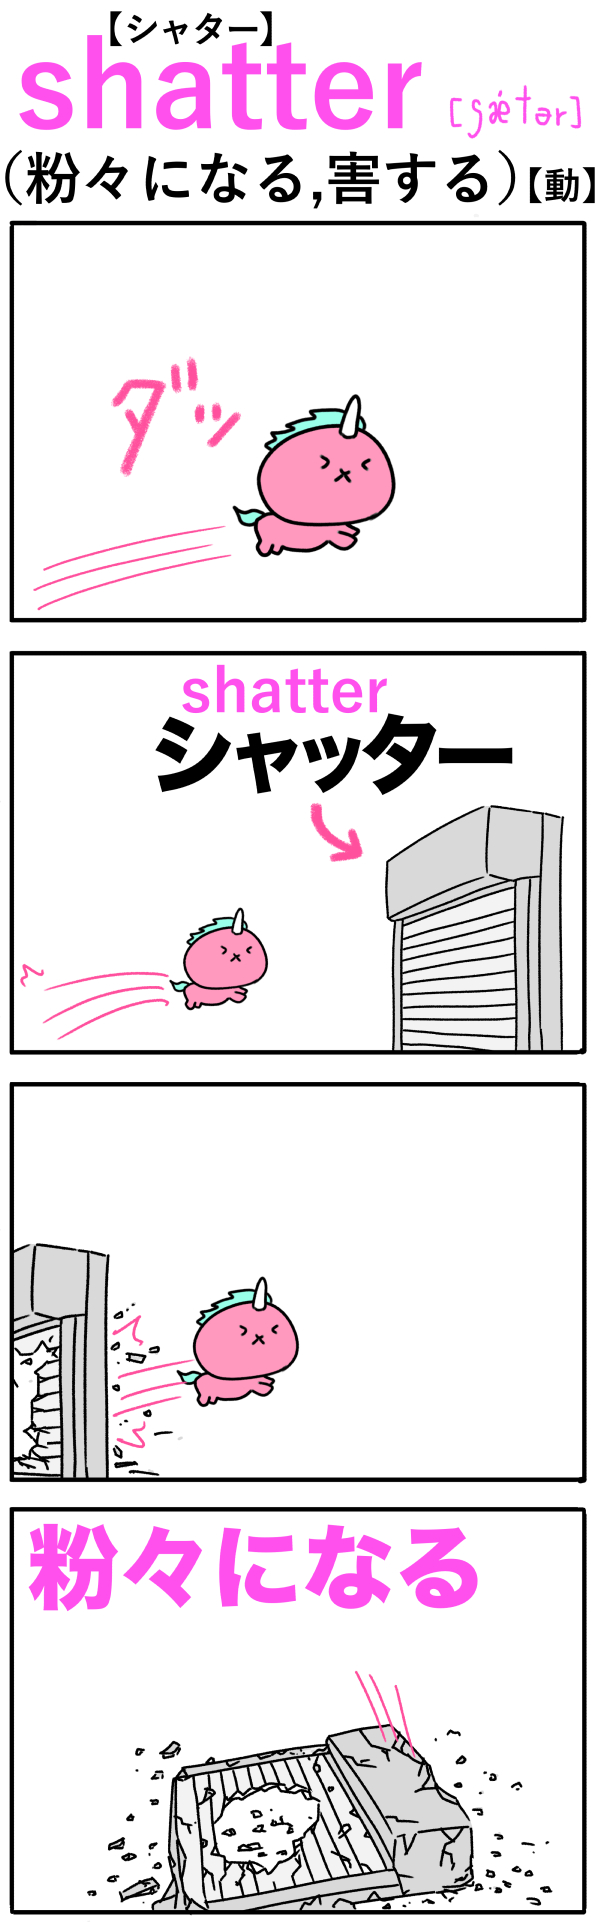 shatter（粉々になる、害する）の語呂合わせ英単語